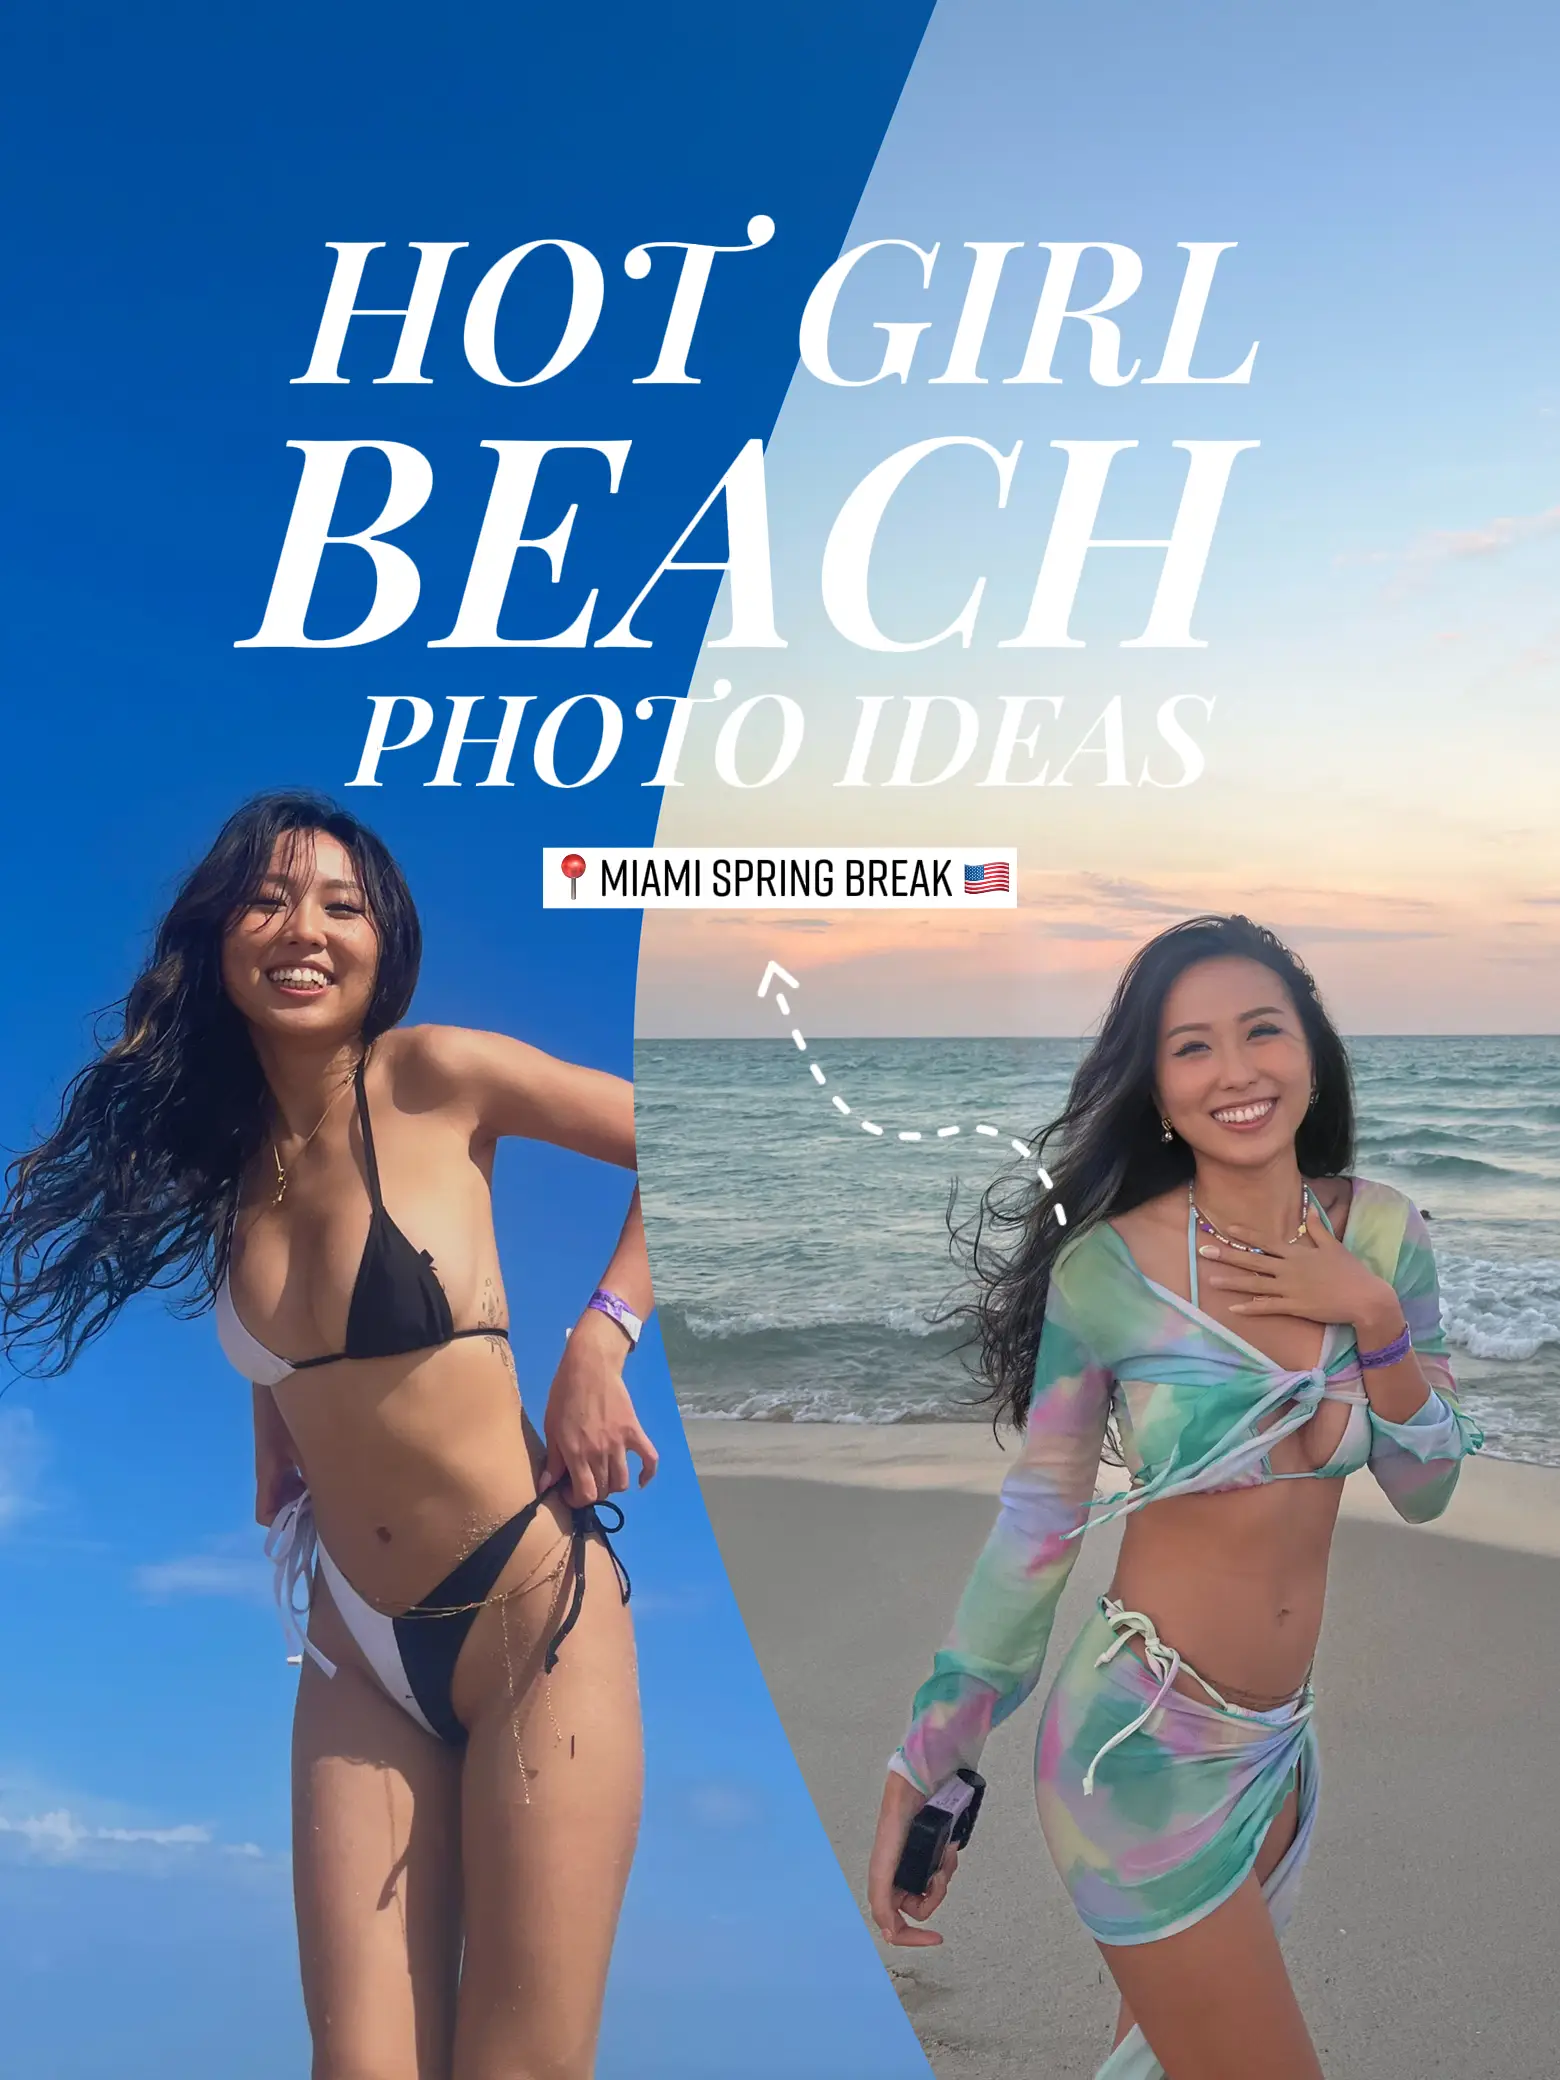 chris wojcik recommends Hot Girl On The Beach